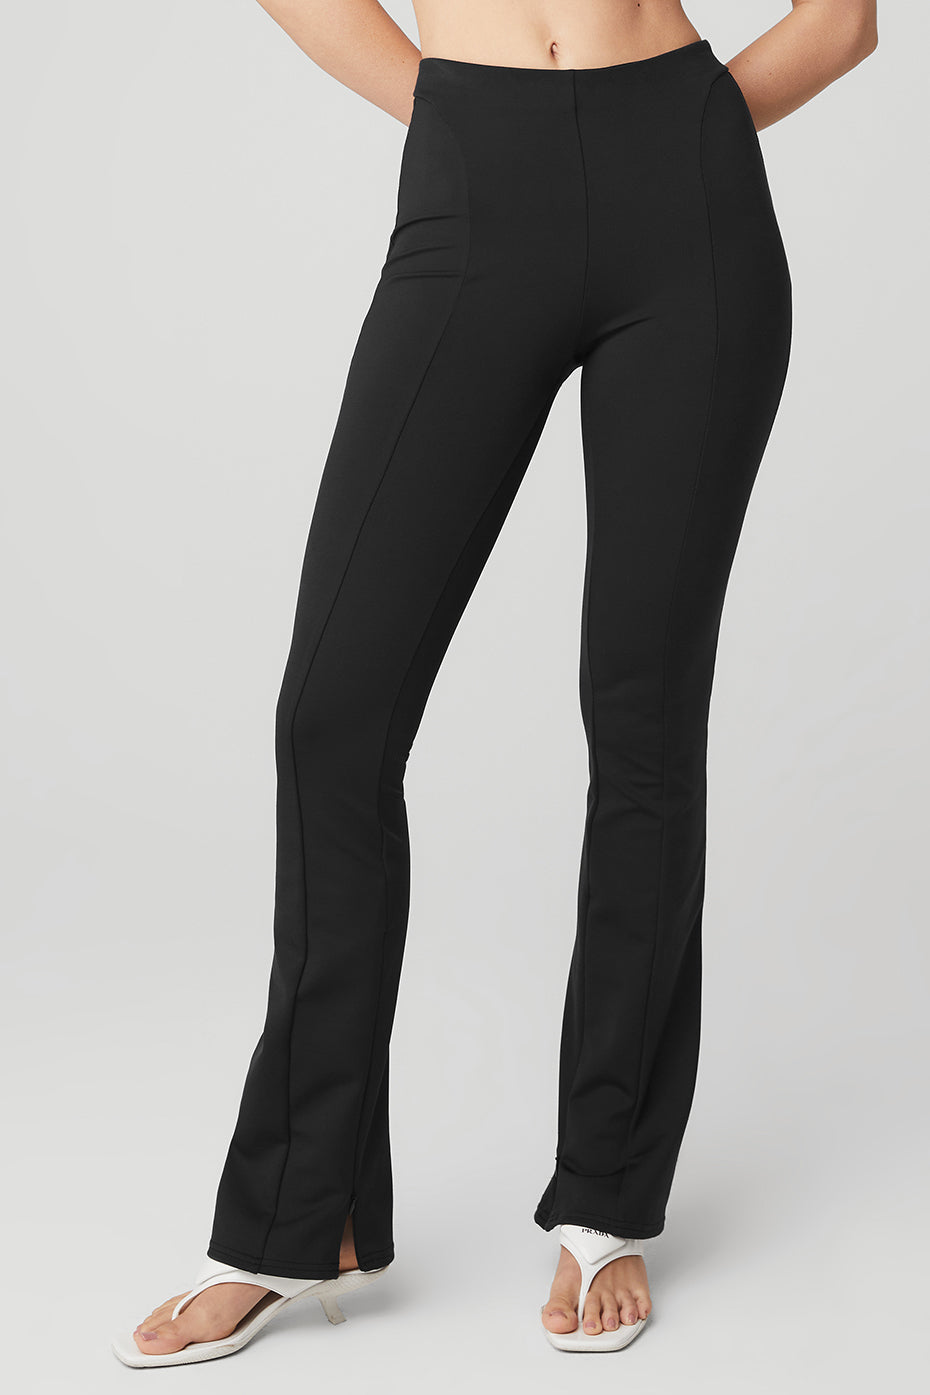 Alo Yoga High-waist 7/8 Zip It Flare Legging in Black Stretch Pants XS, 191677304147 - Alo Yoga clothing - Black